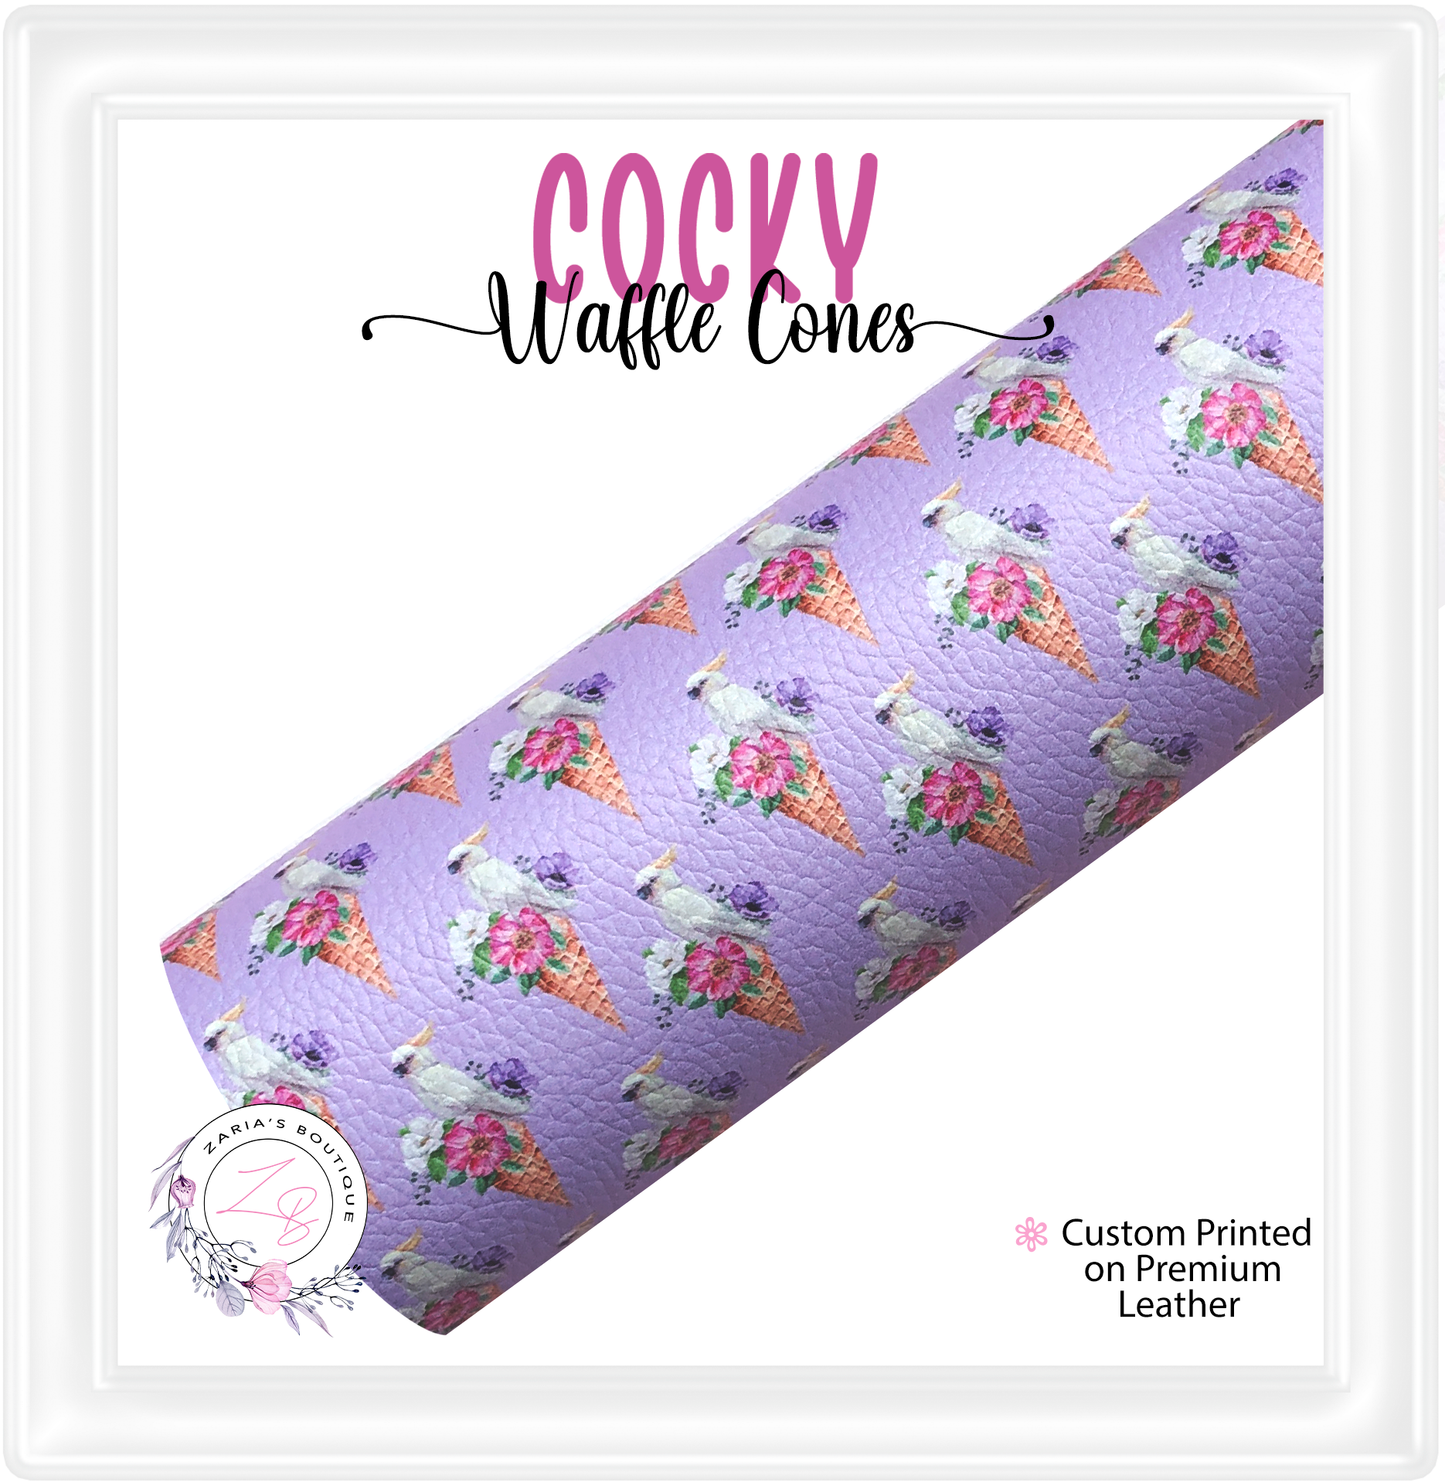 ⋅ Cockatoo Cones ⋅ Custom Vegan Faux Leather ⋅ Sheets Or Rolls!